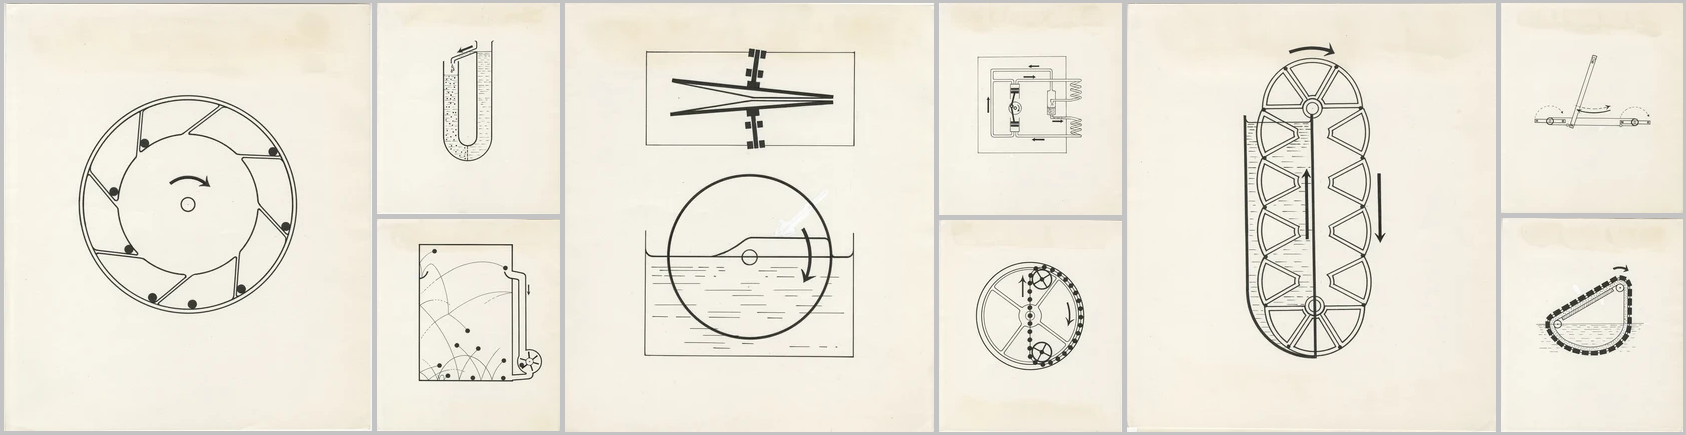 Original line drawings by David EH Jones exploring different designs for Perpetual Motion Machines.